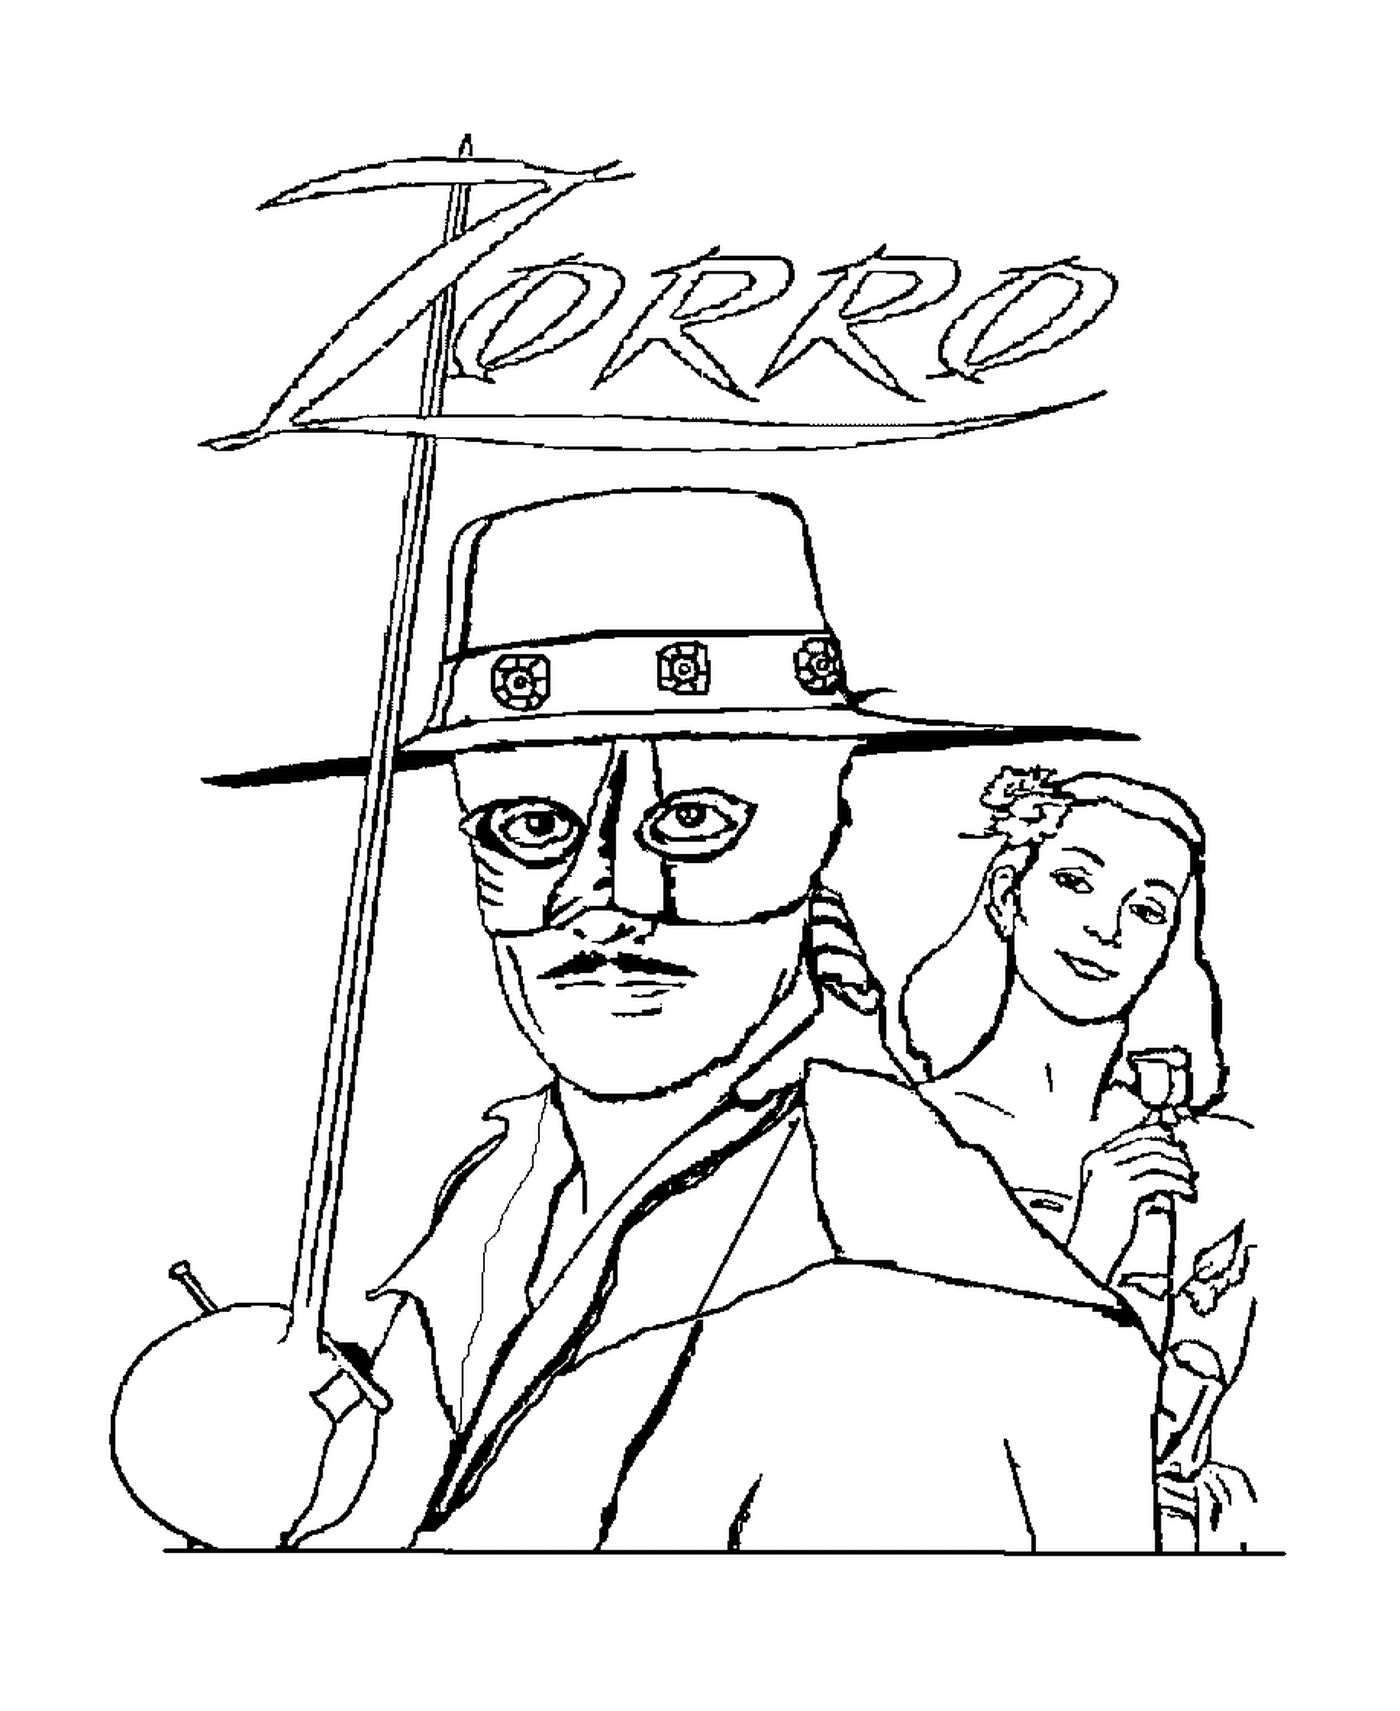  Zorro 蒙面的义警和一个人 